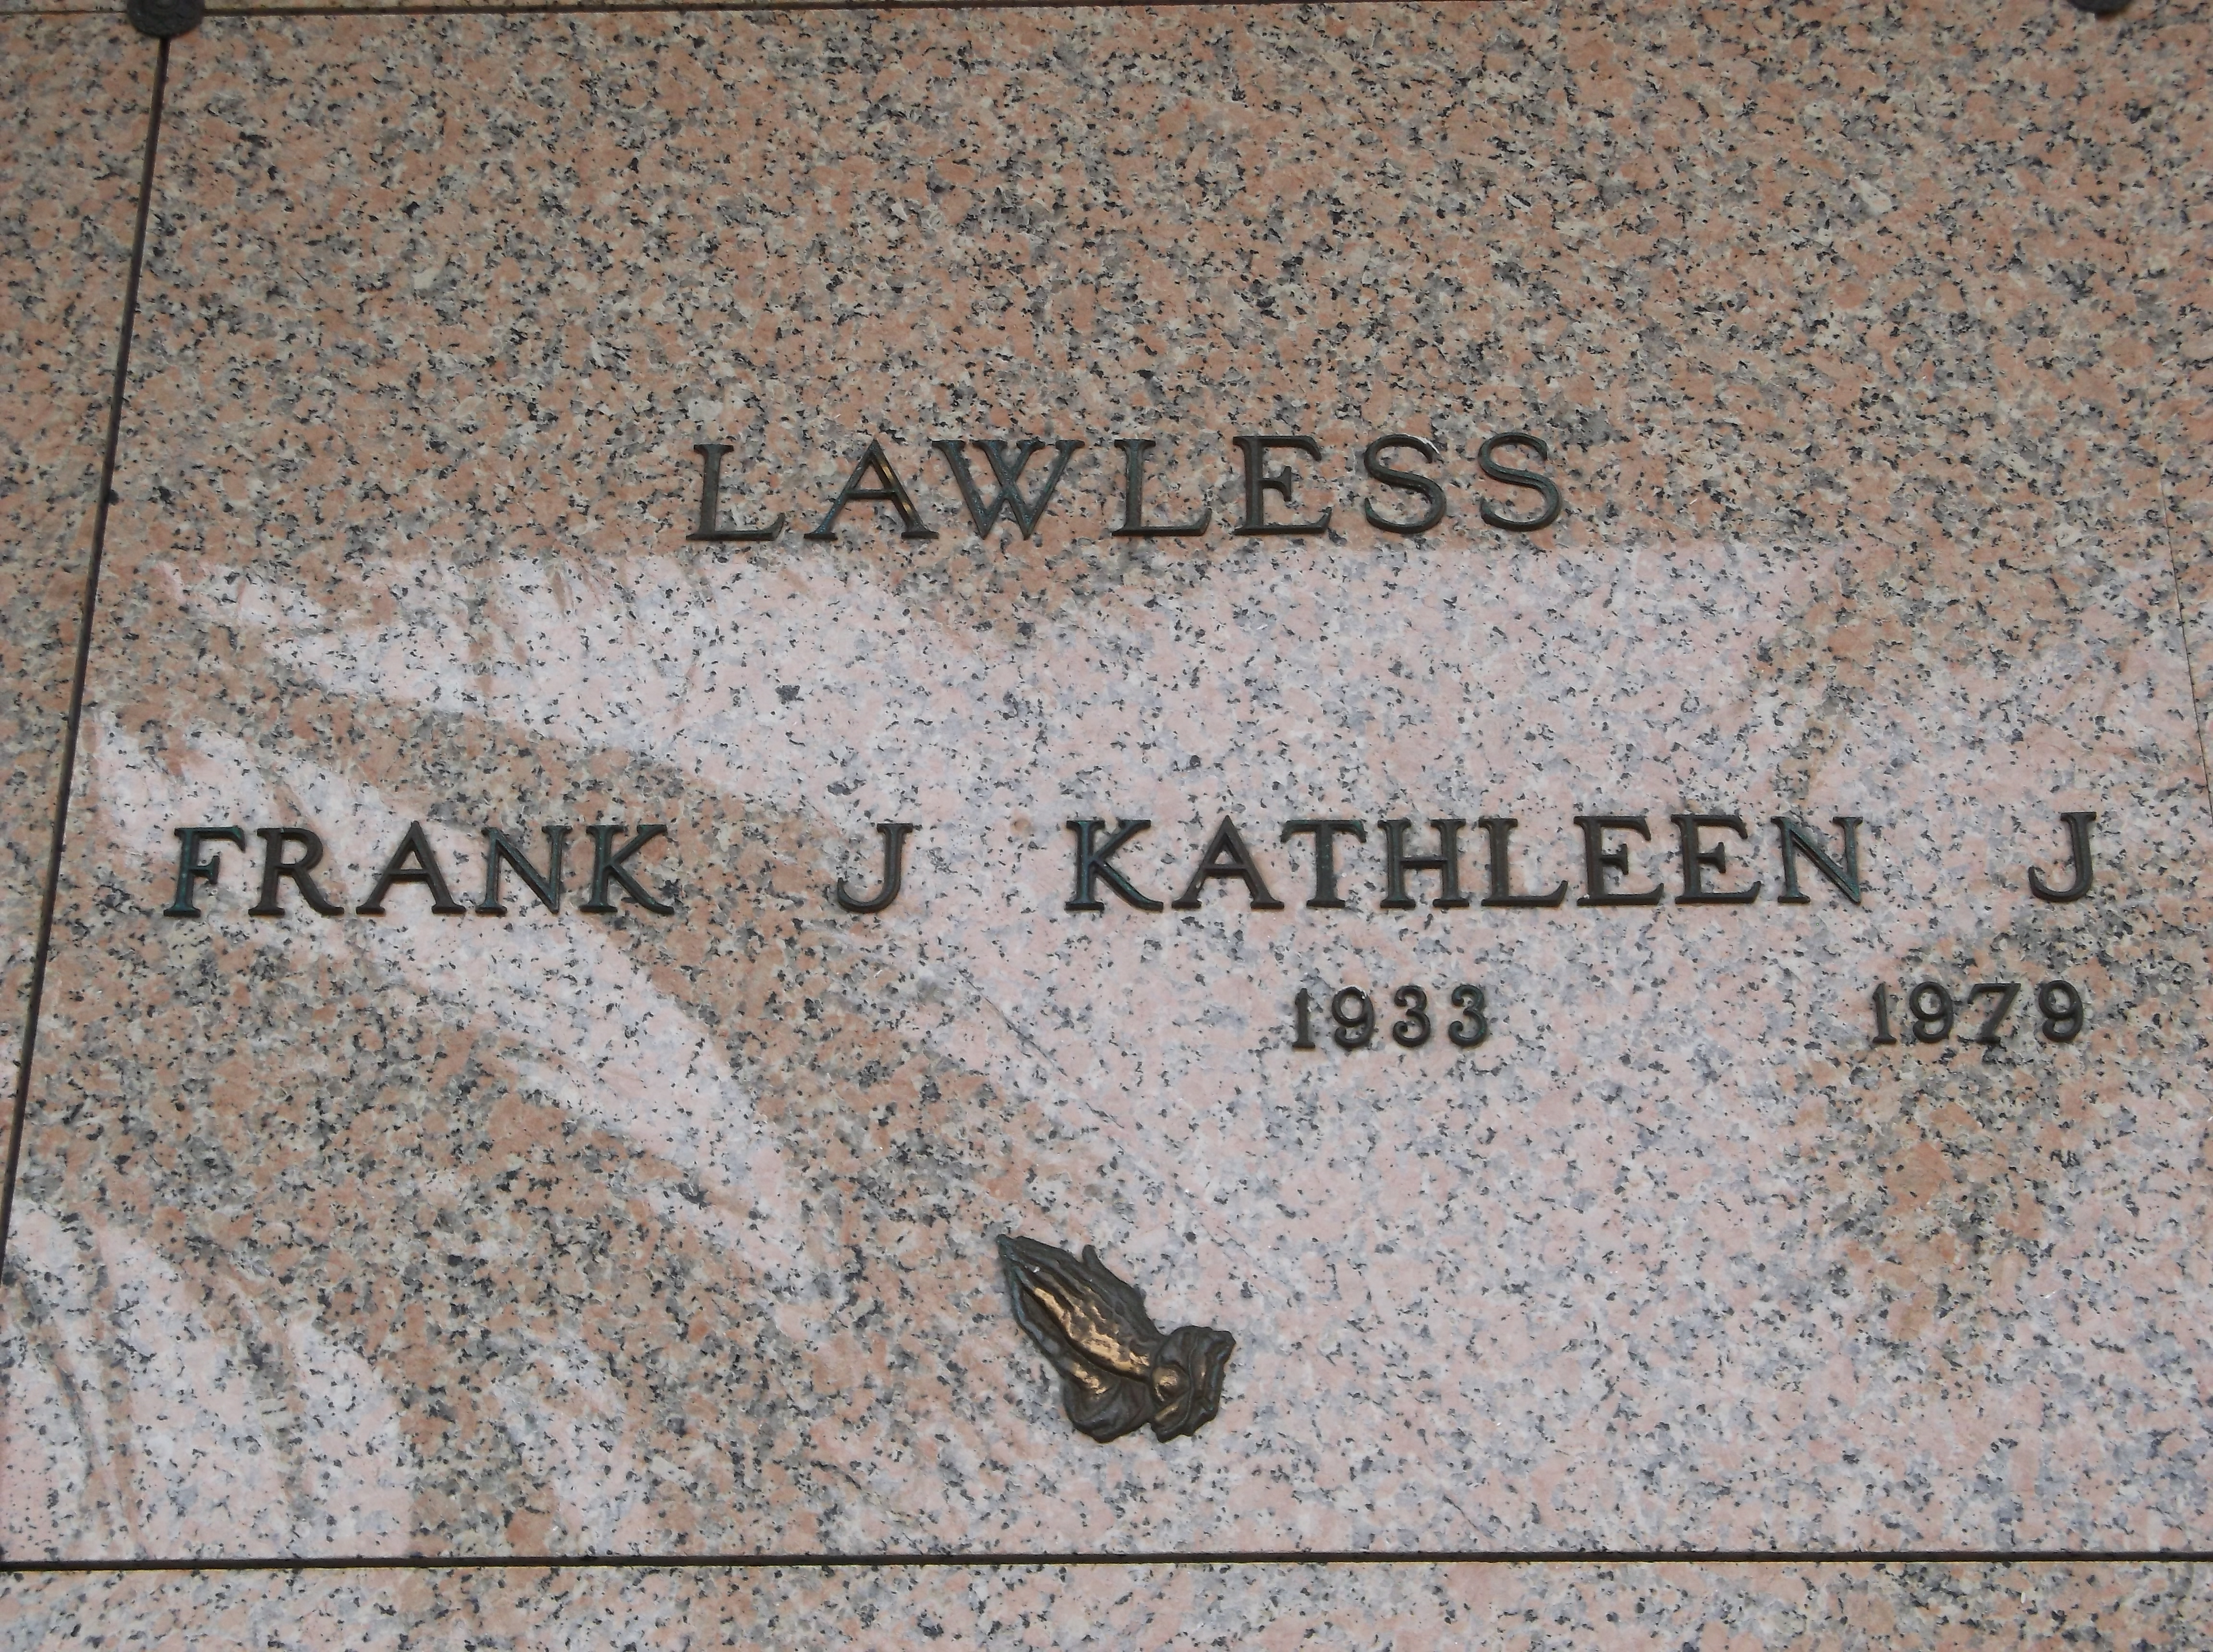 Kathleen J Lawless